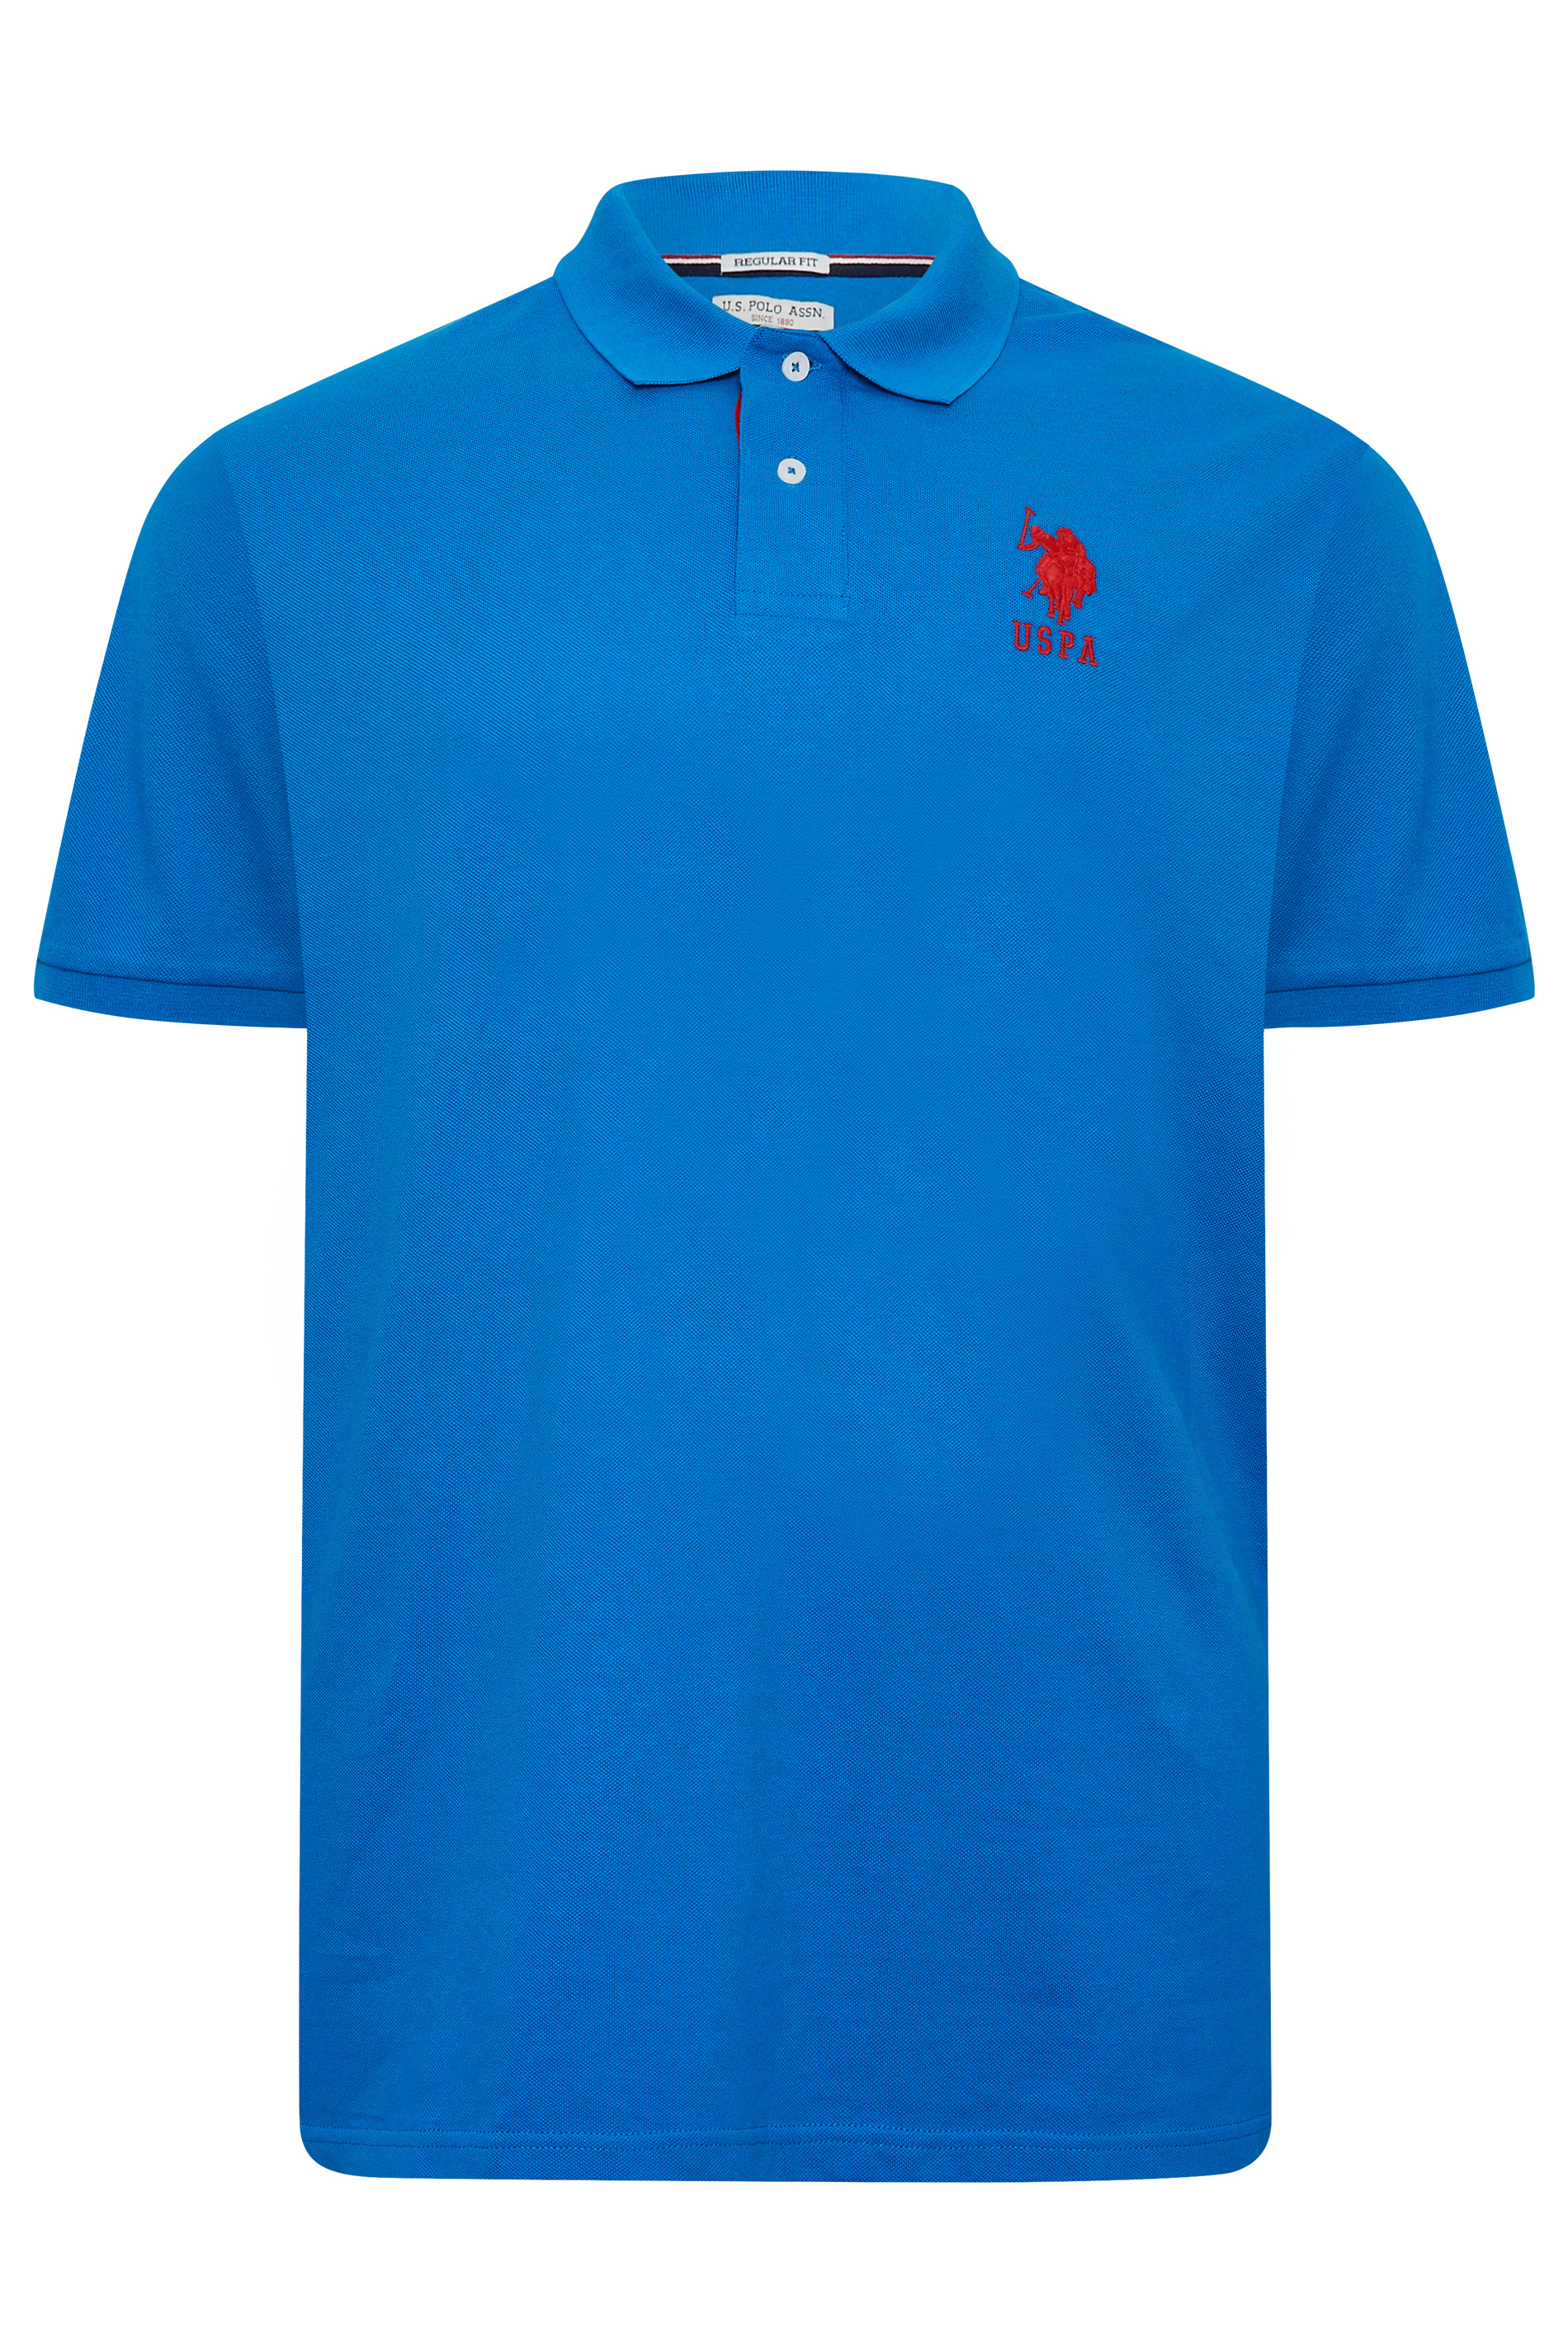 U.S. POLO ASSN. Big & Tall Blue Player 3 Logo Polo Shirt